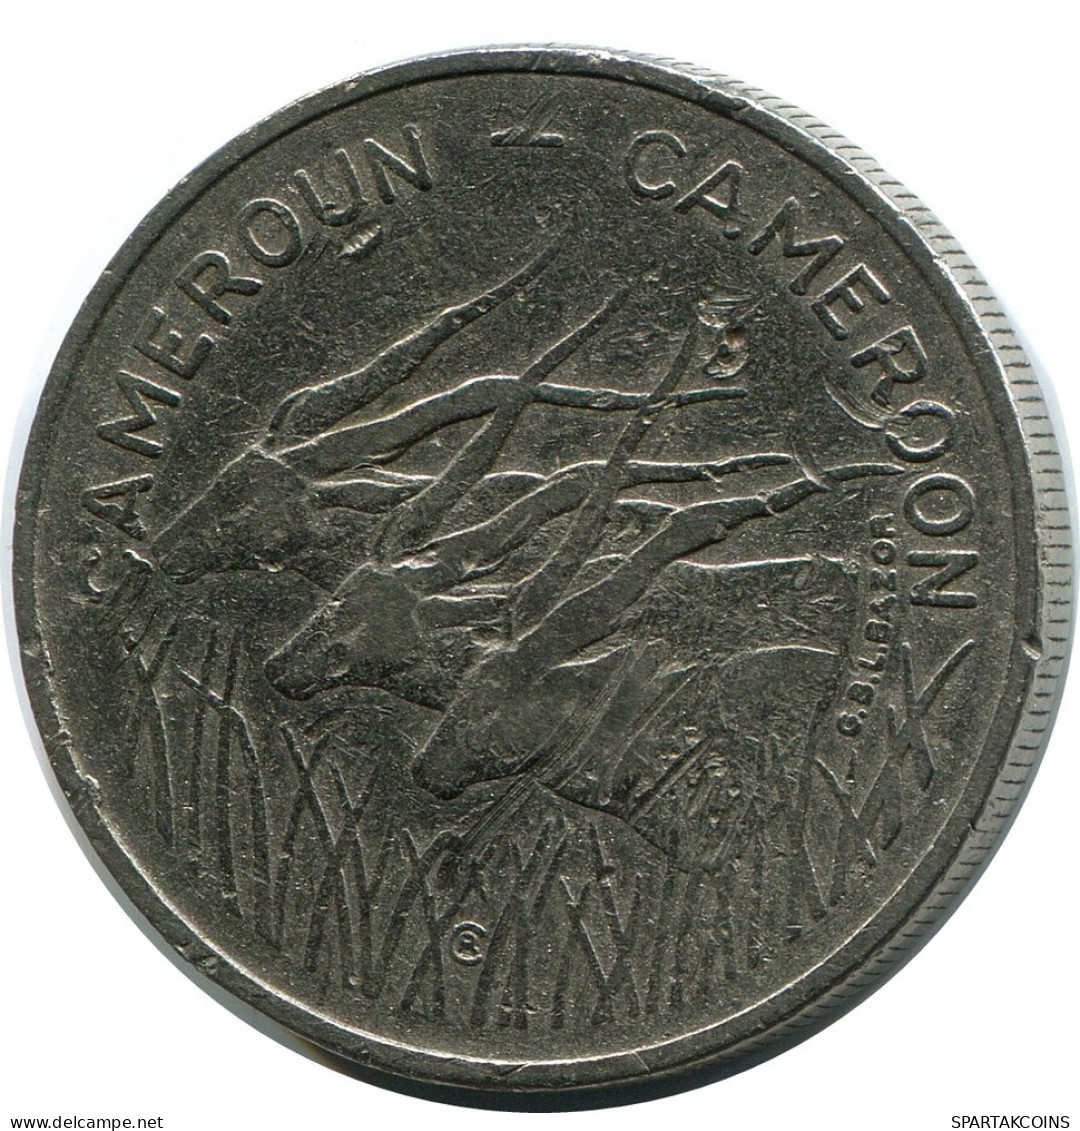 100 FRANCS 1975 KAMERUN CAMEROON Münze #AP854.D.A - Kamerun